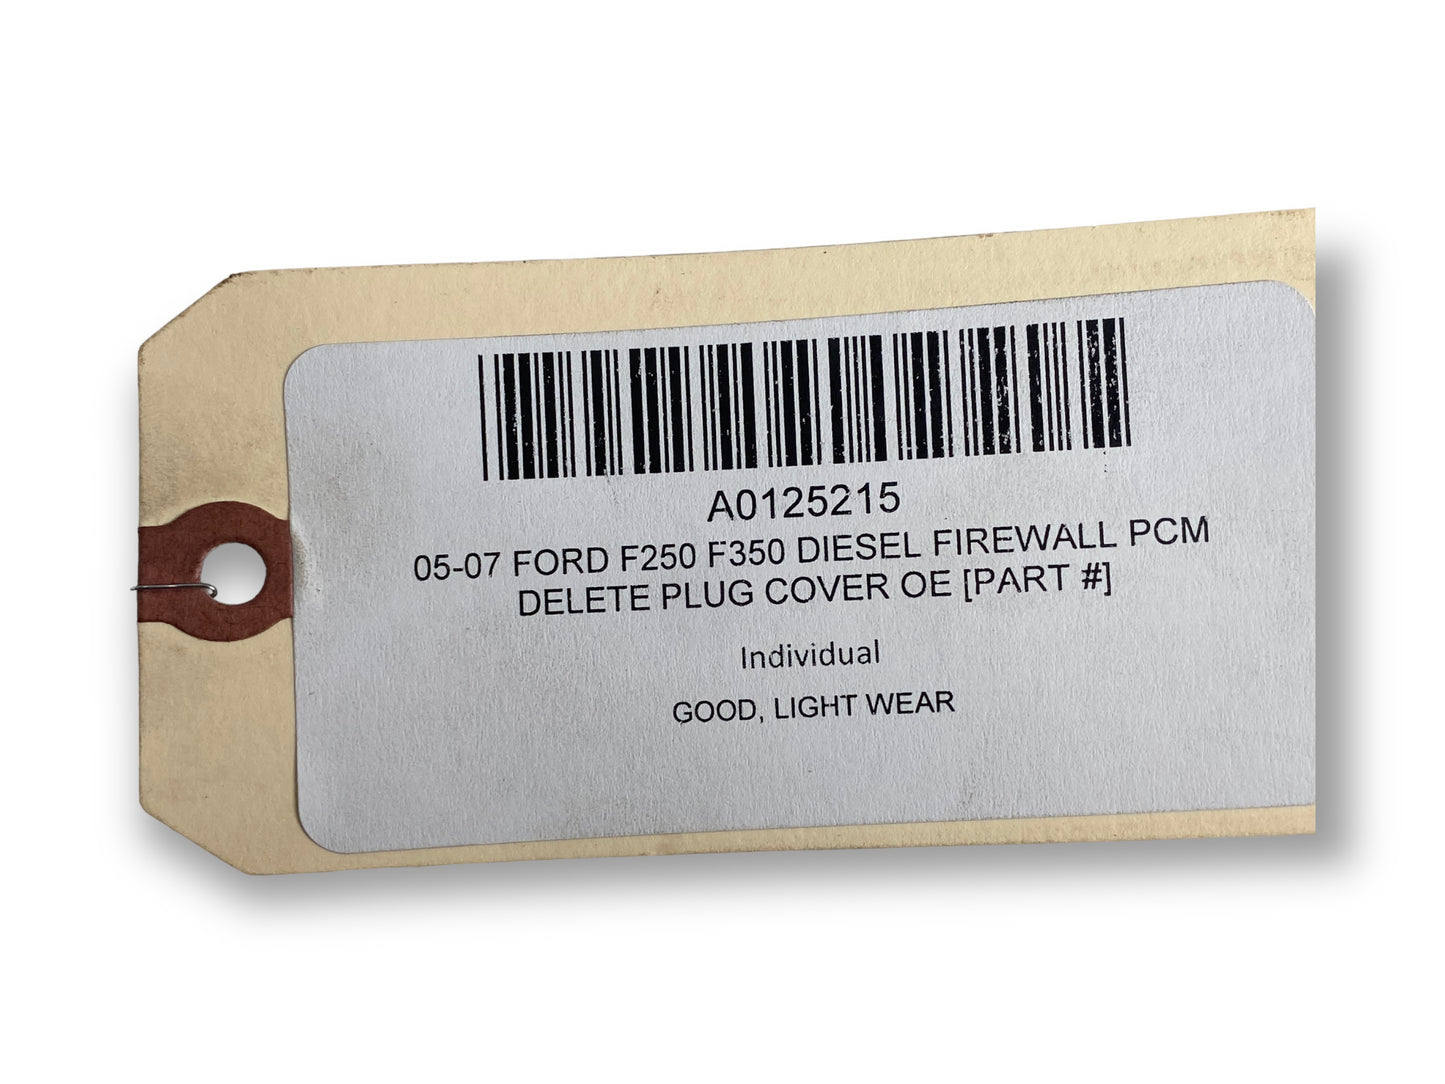 05-07 Ford F250 F350 Diesel Firewall PCM Plug Cover OE